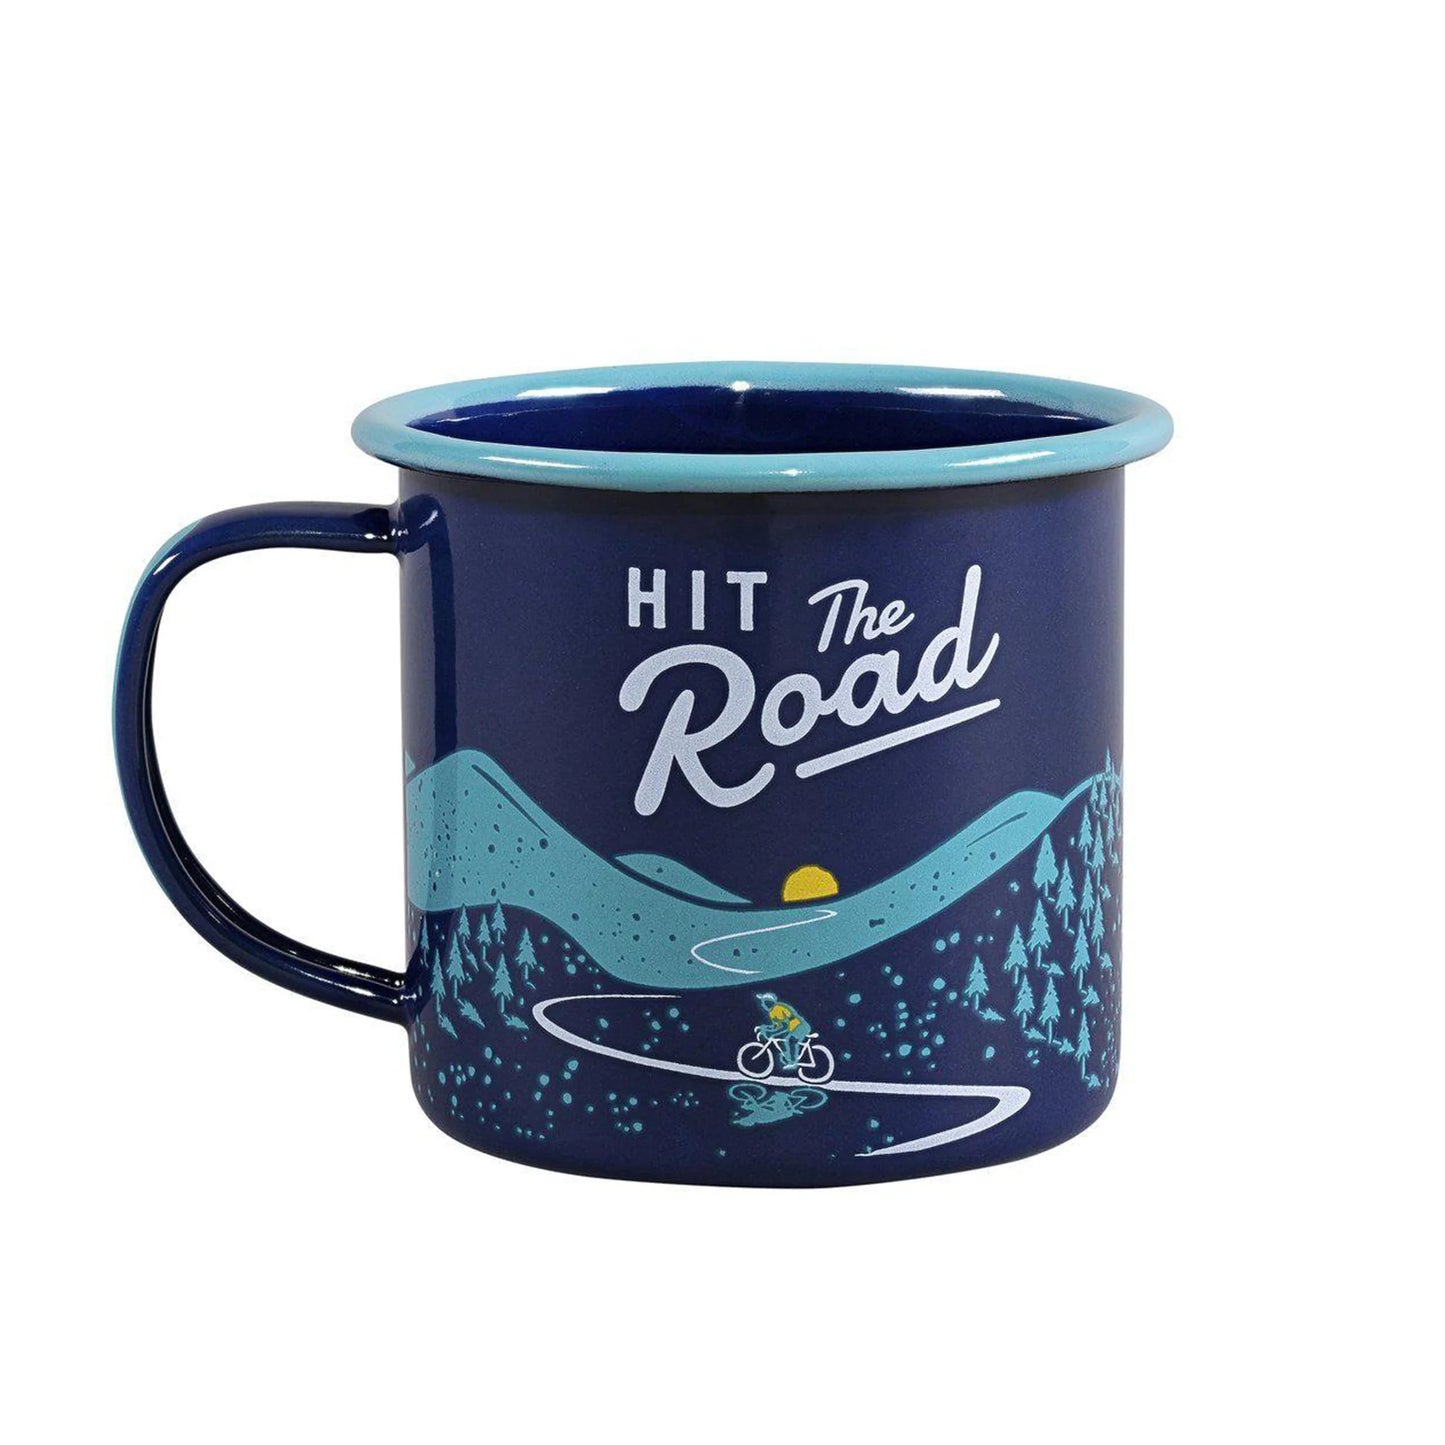 "Hit the Road" Enamel Mug